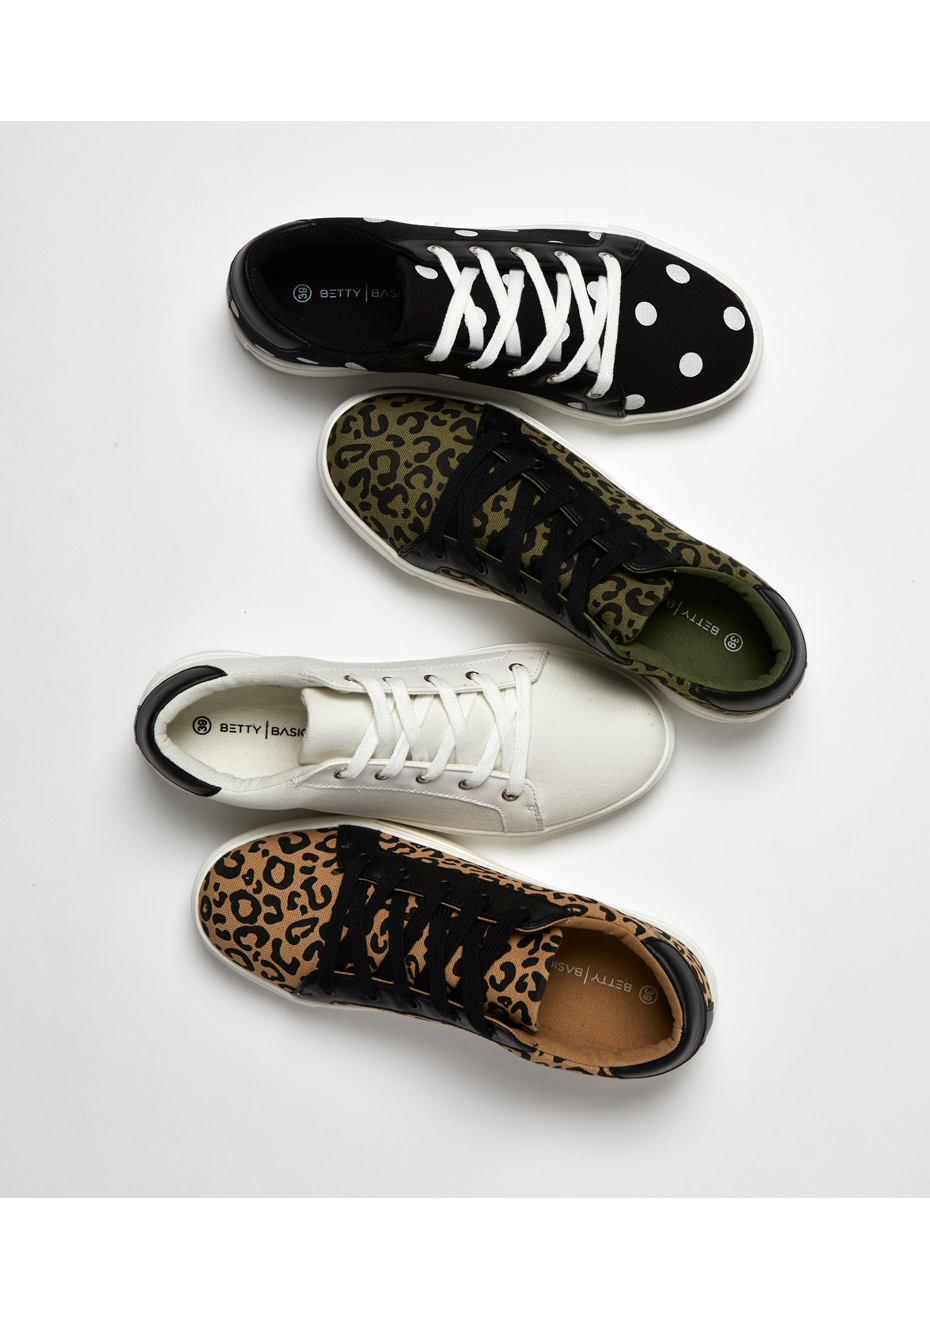 betty basics leopard shoes